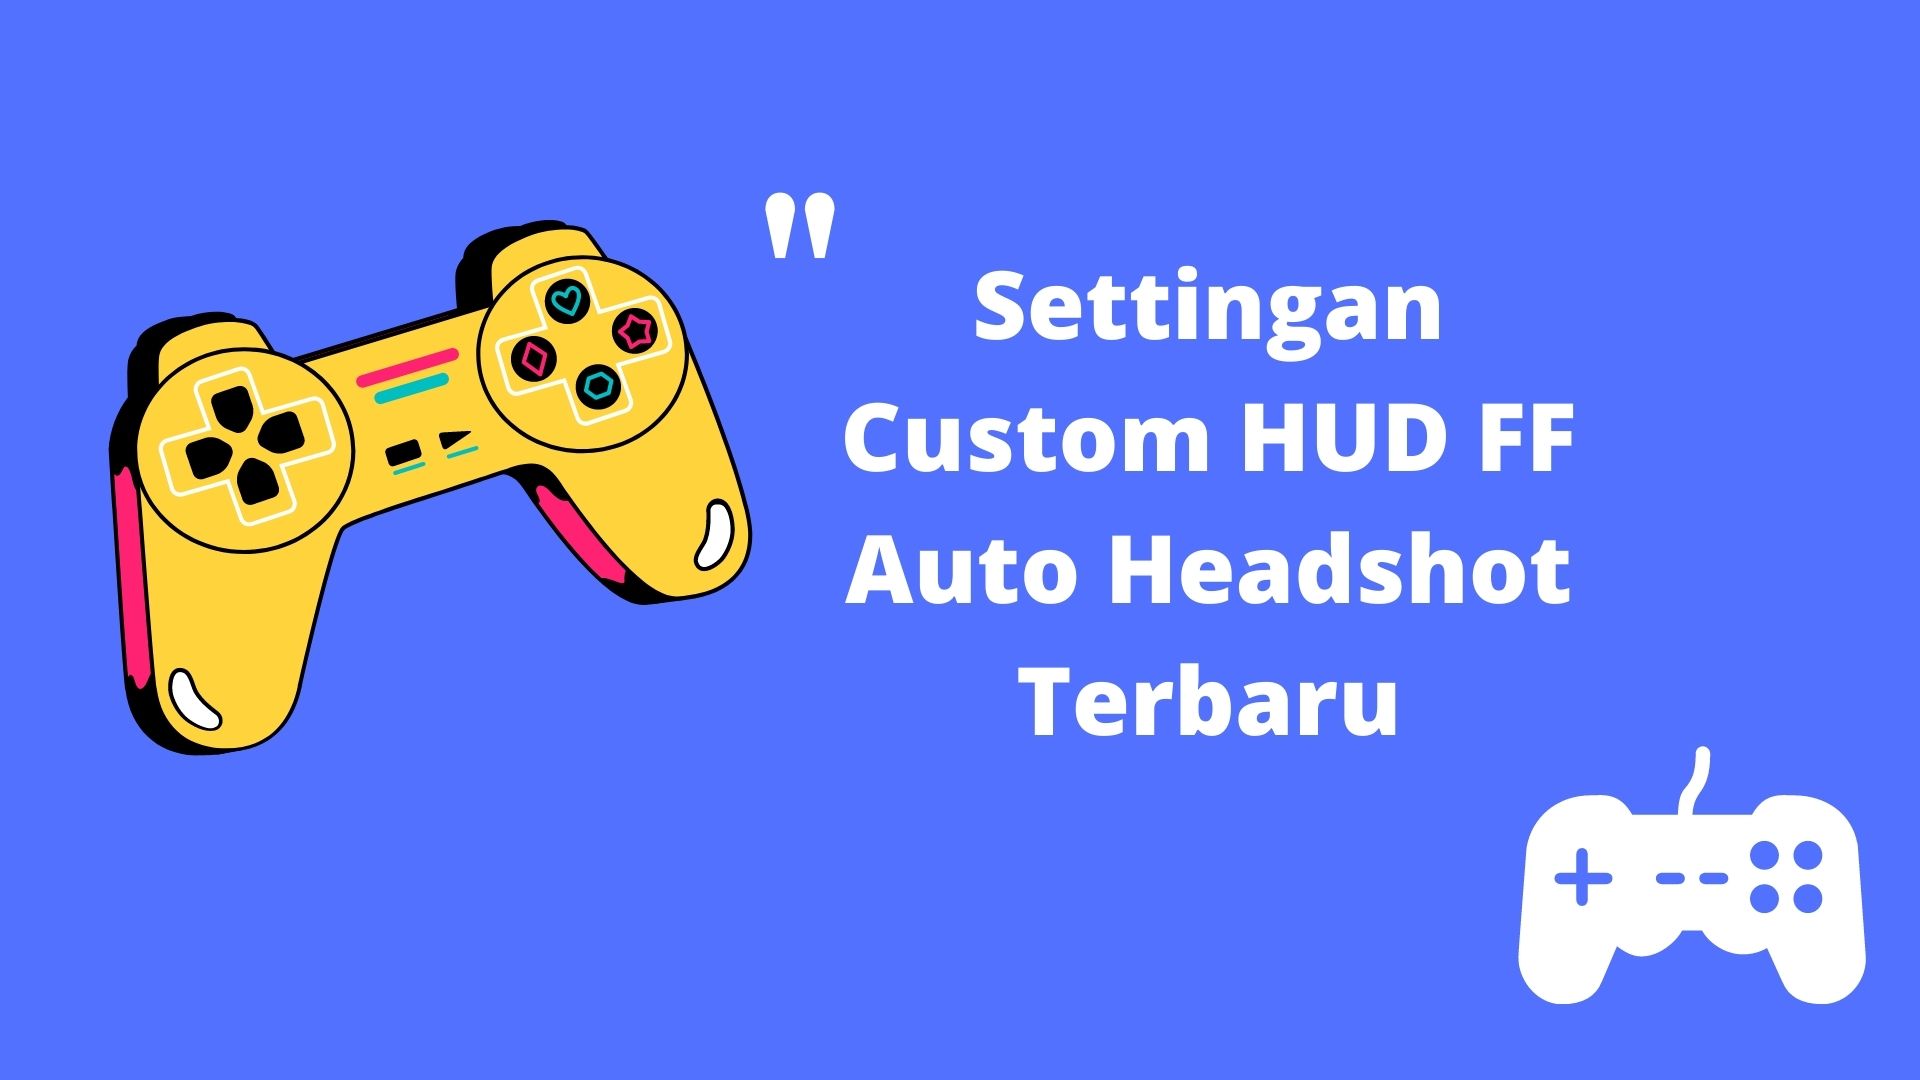 Settingan Custom HUD FF Auto Headshot